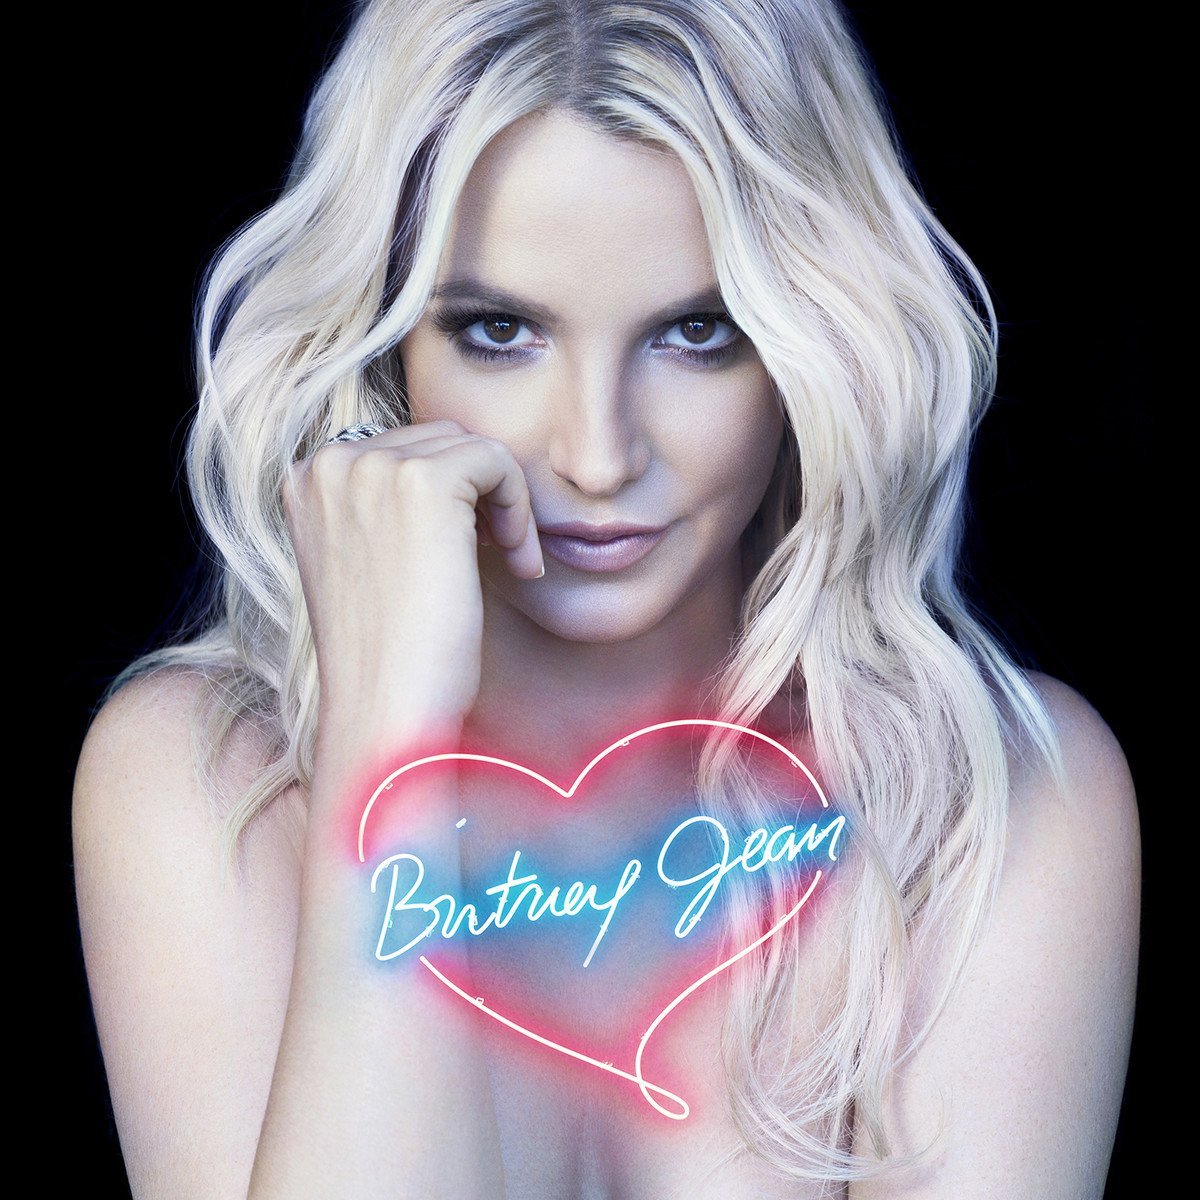 Britney Spears Britney Jean Album Download Has It Leaked